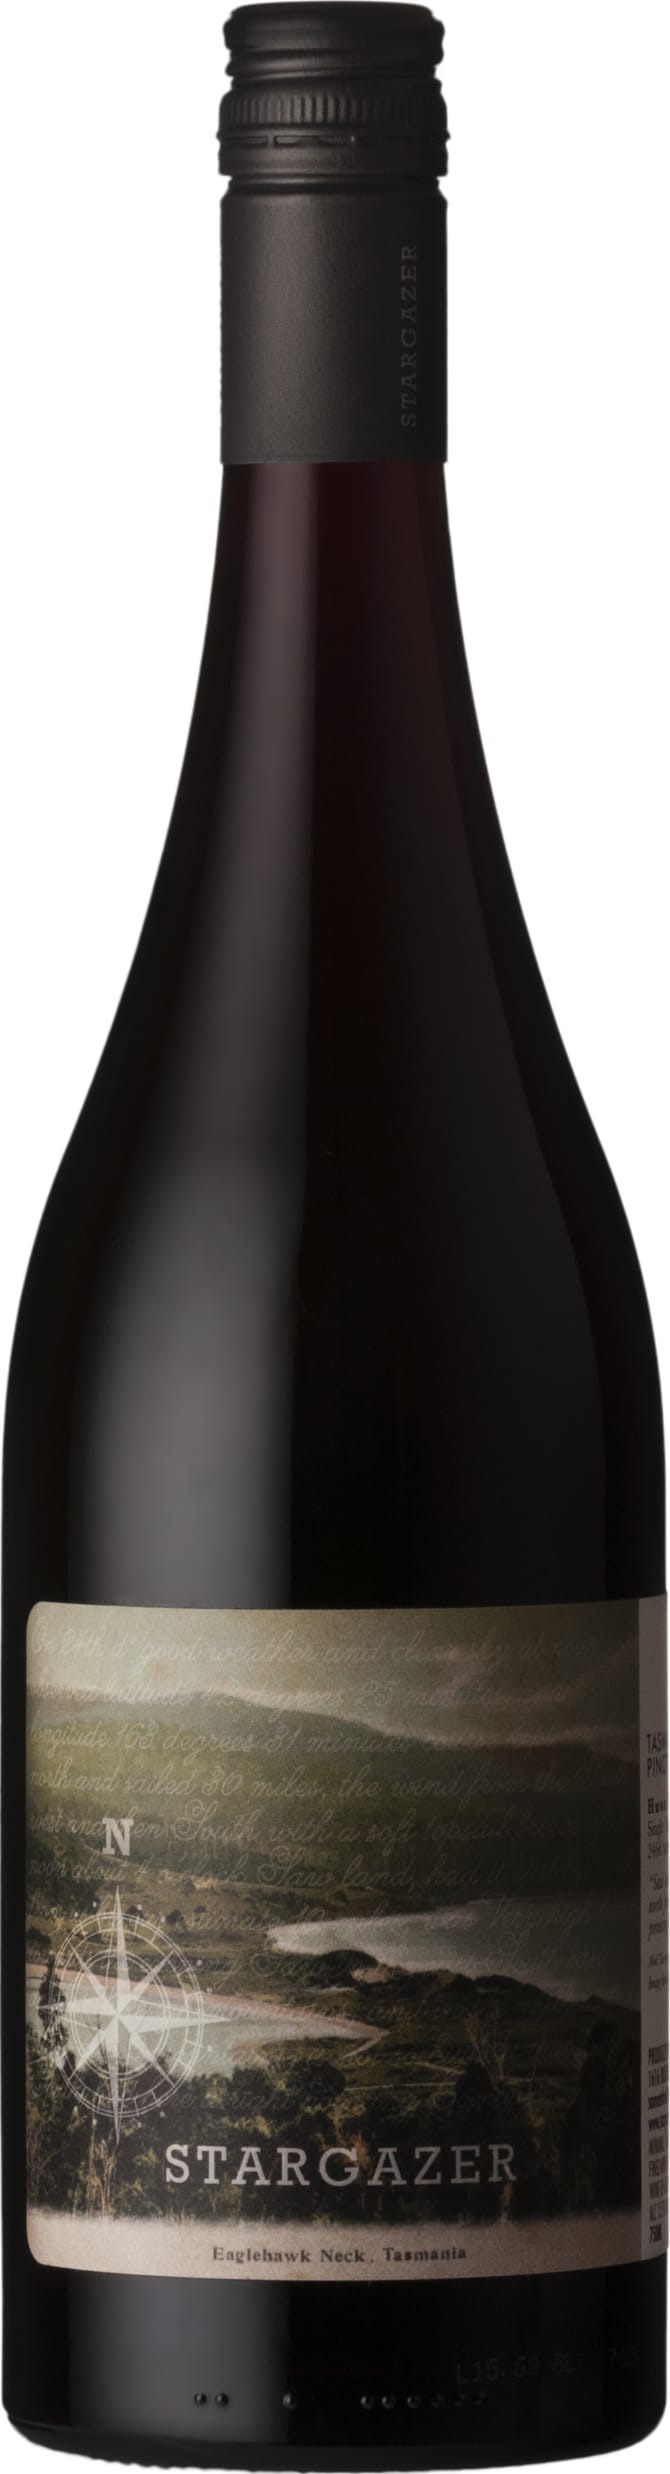 Stargazer Pinot Noir 2021 75cl - Buy Stargazer Wines from GREAT WINES DIRECT wine shop